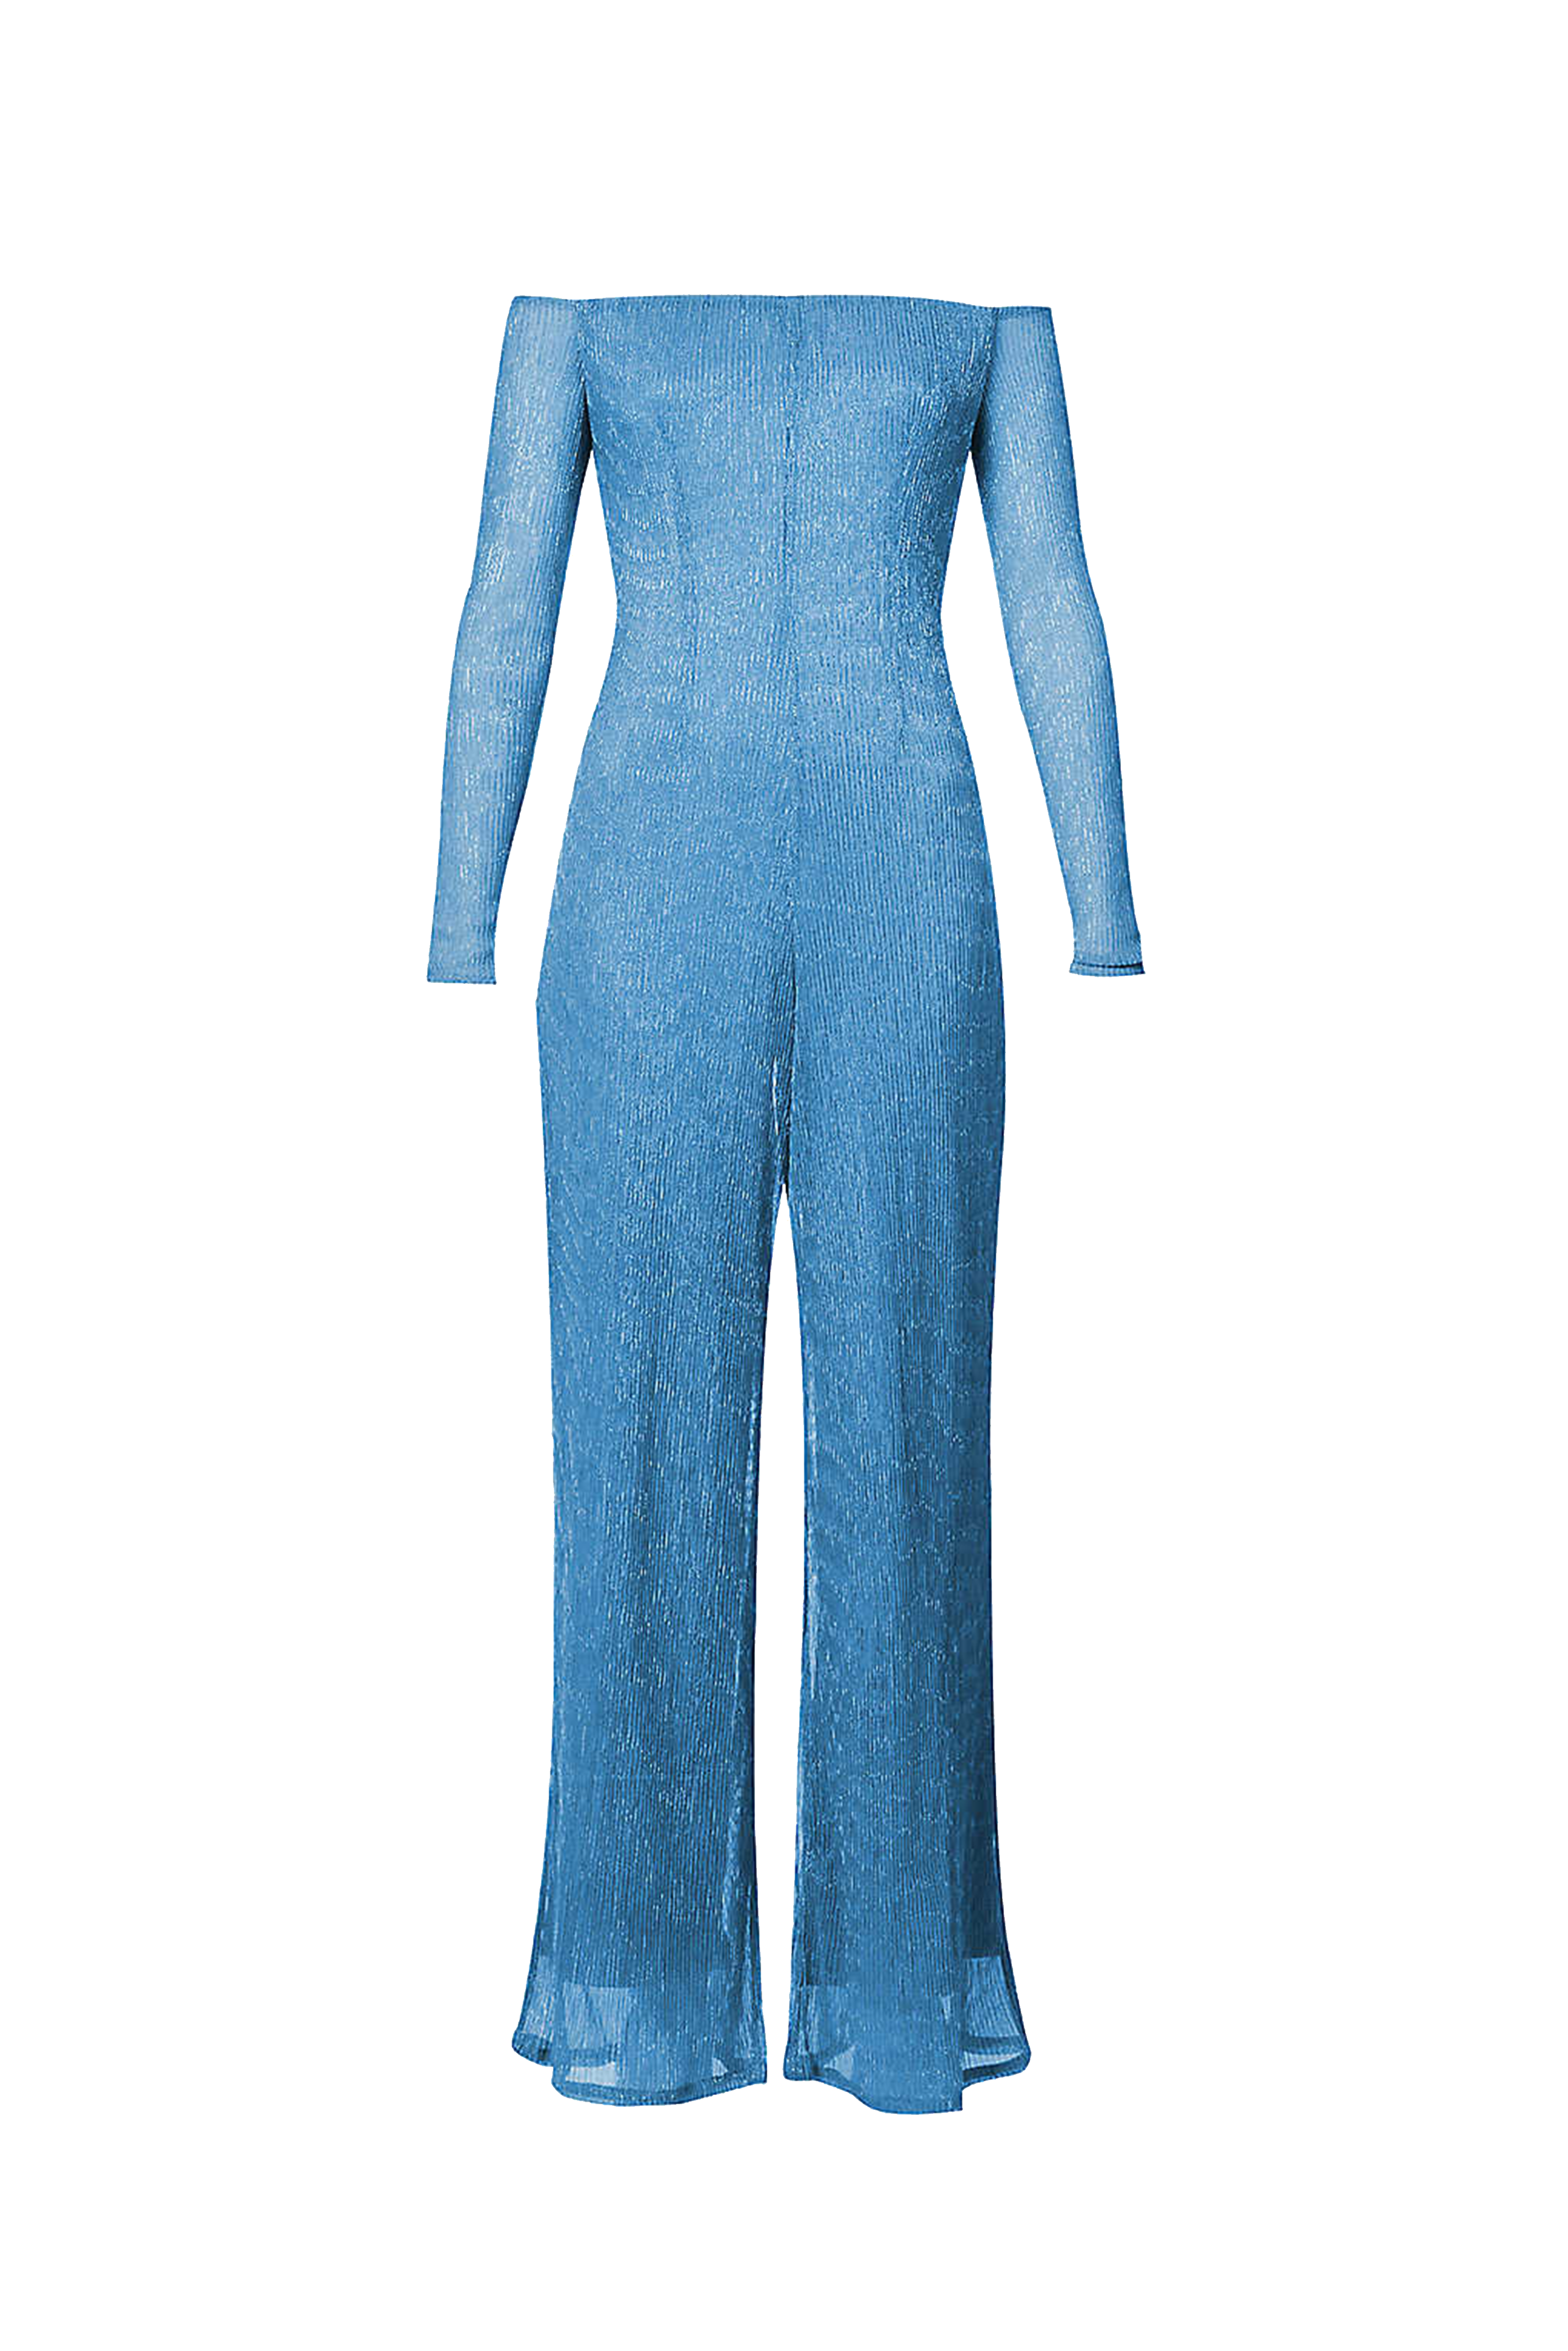 Odette Blue Metallic Plisse Jumpsuit